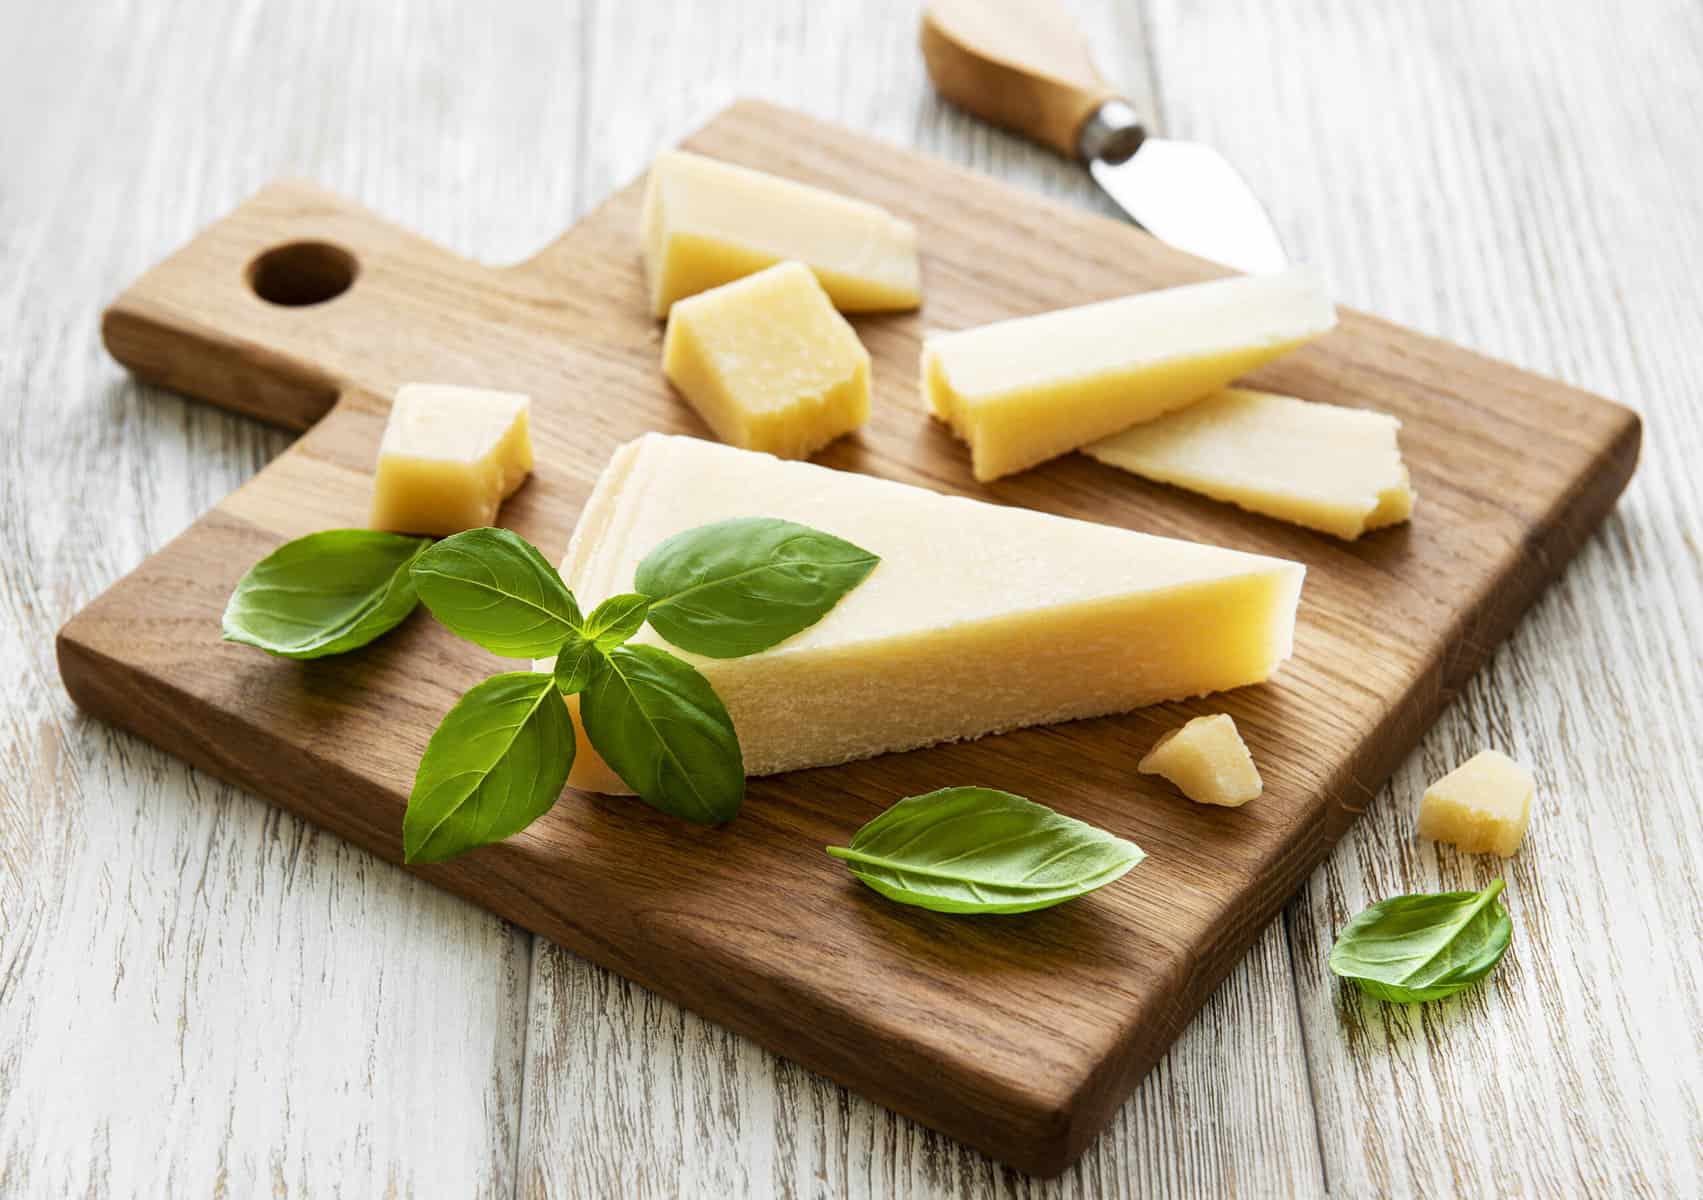 Asiago Cheese vs Parmesan: Italian Cheese Showdown